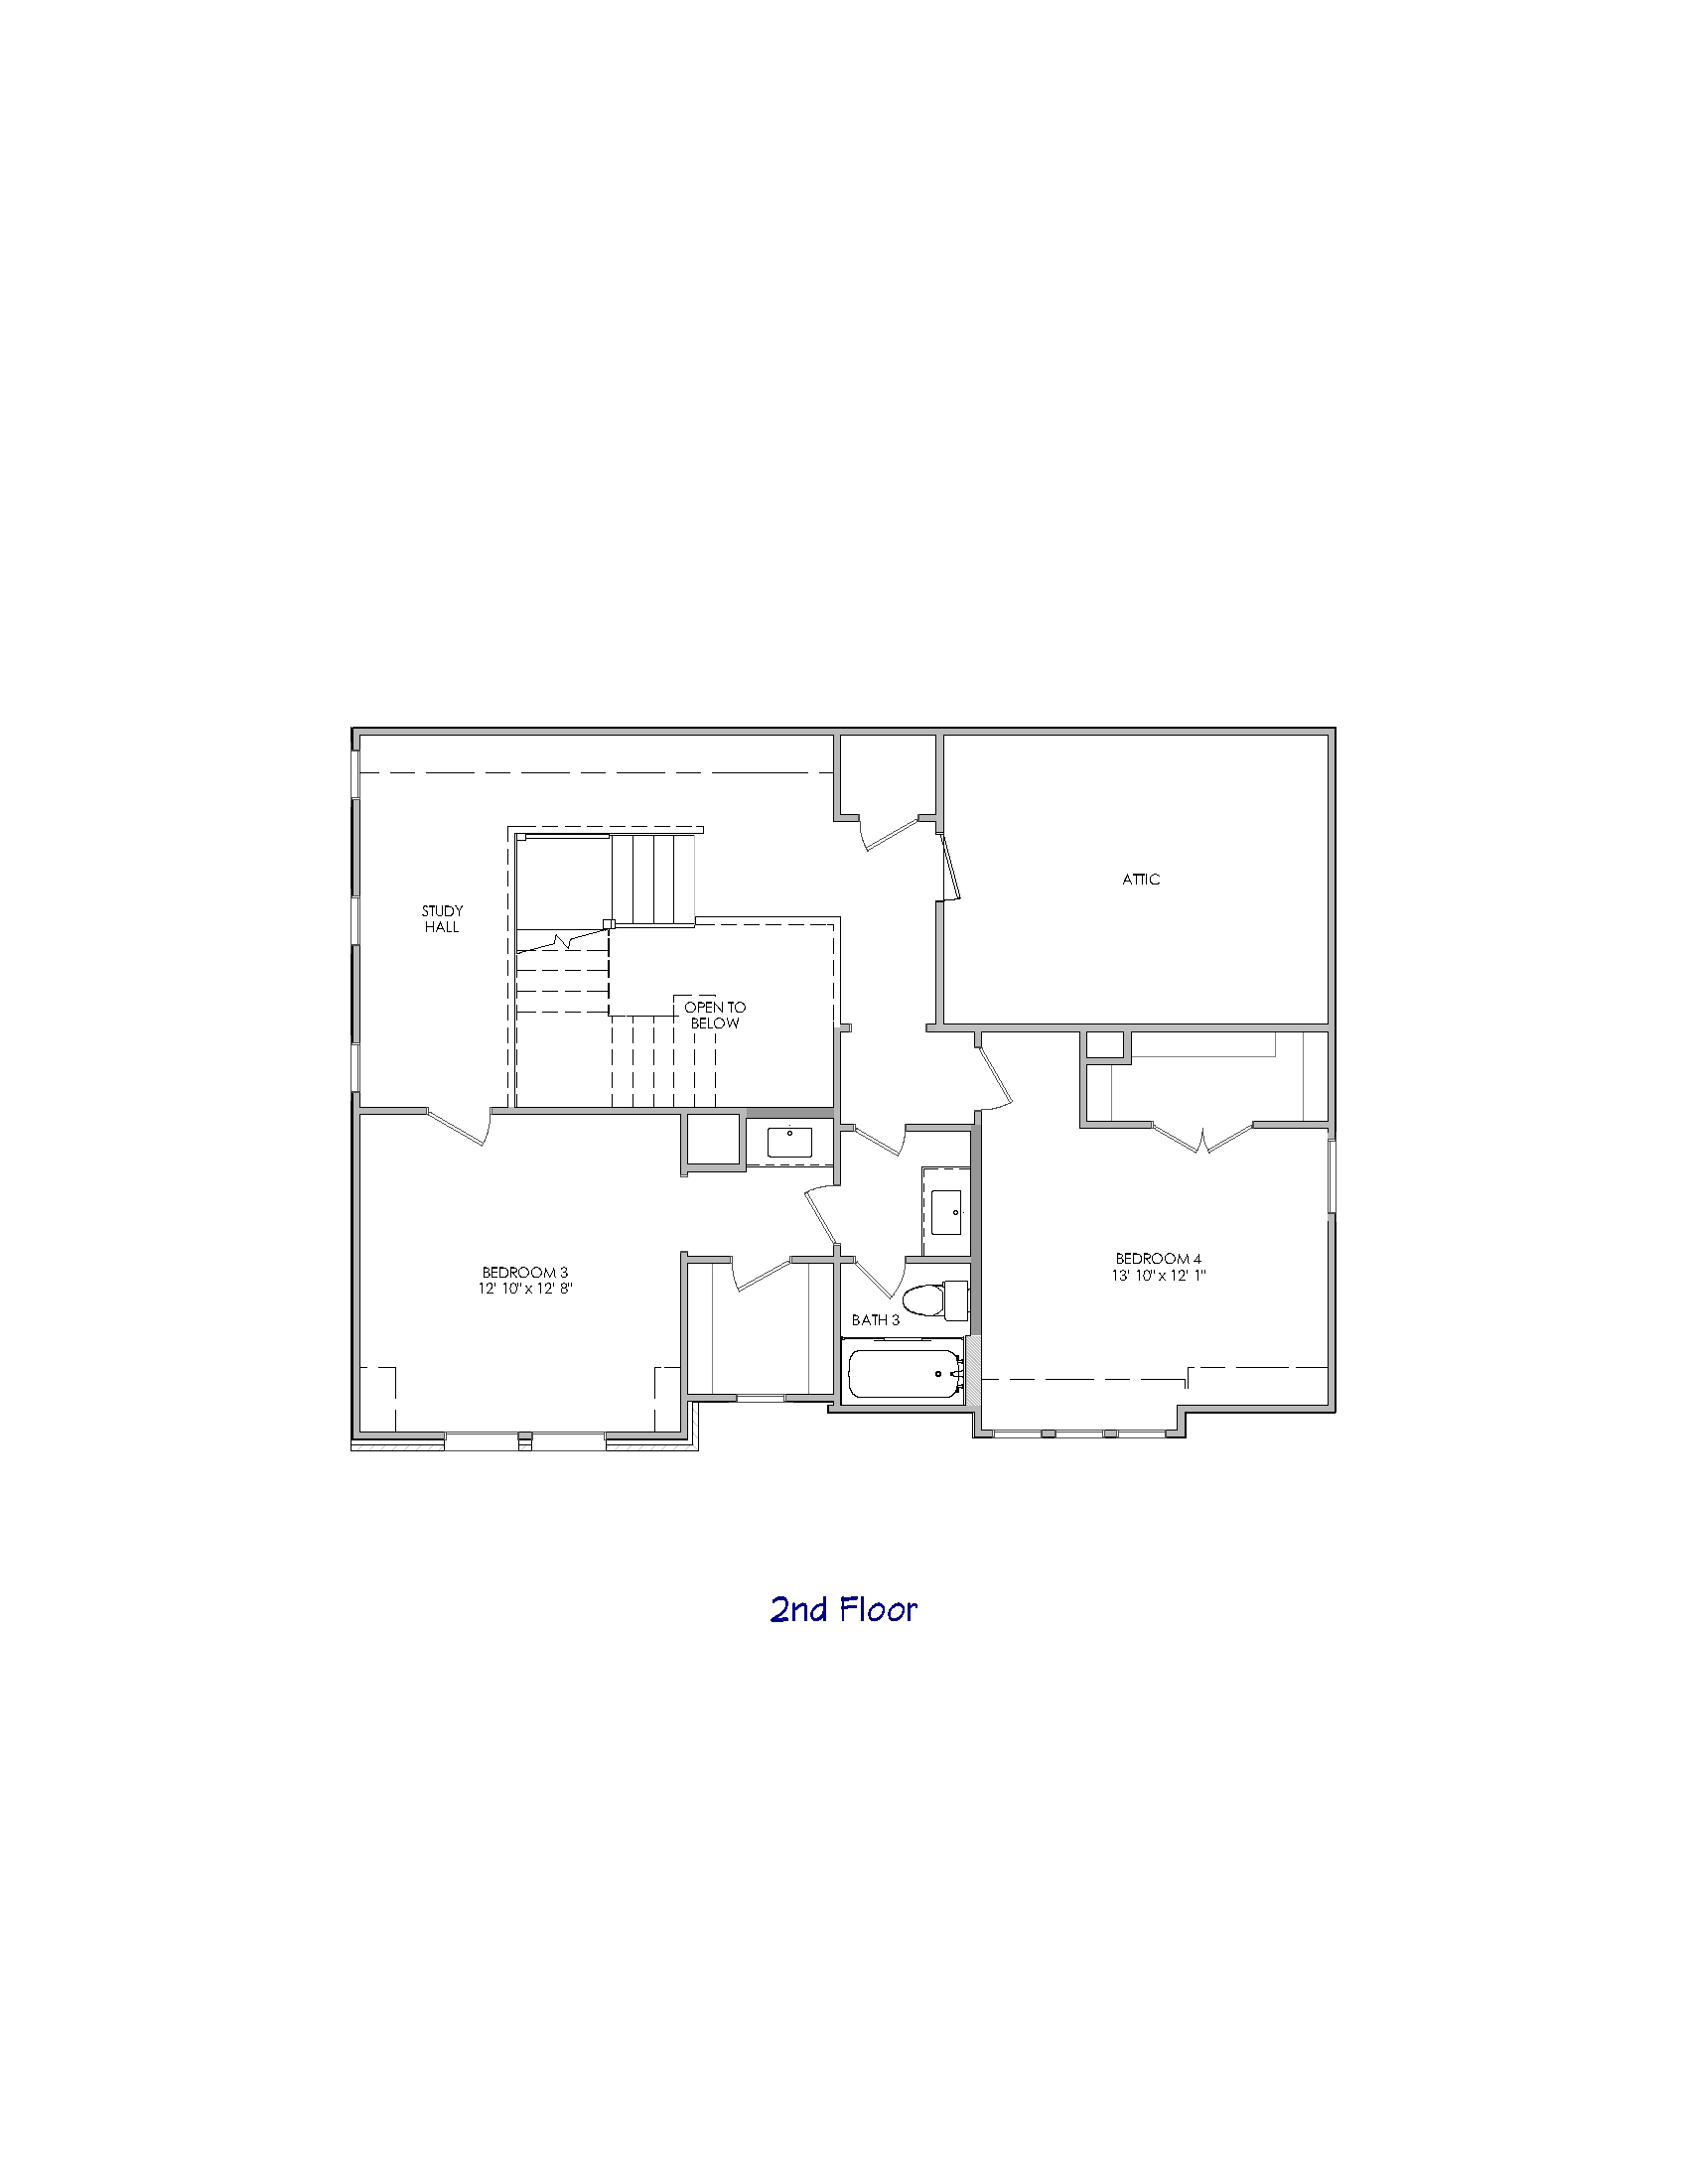 Slayton Floor Plan - 2nd Floor